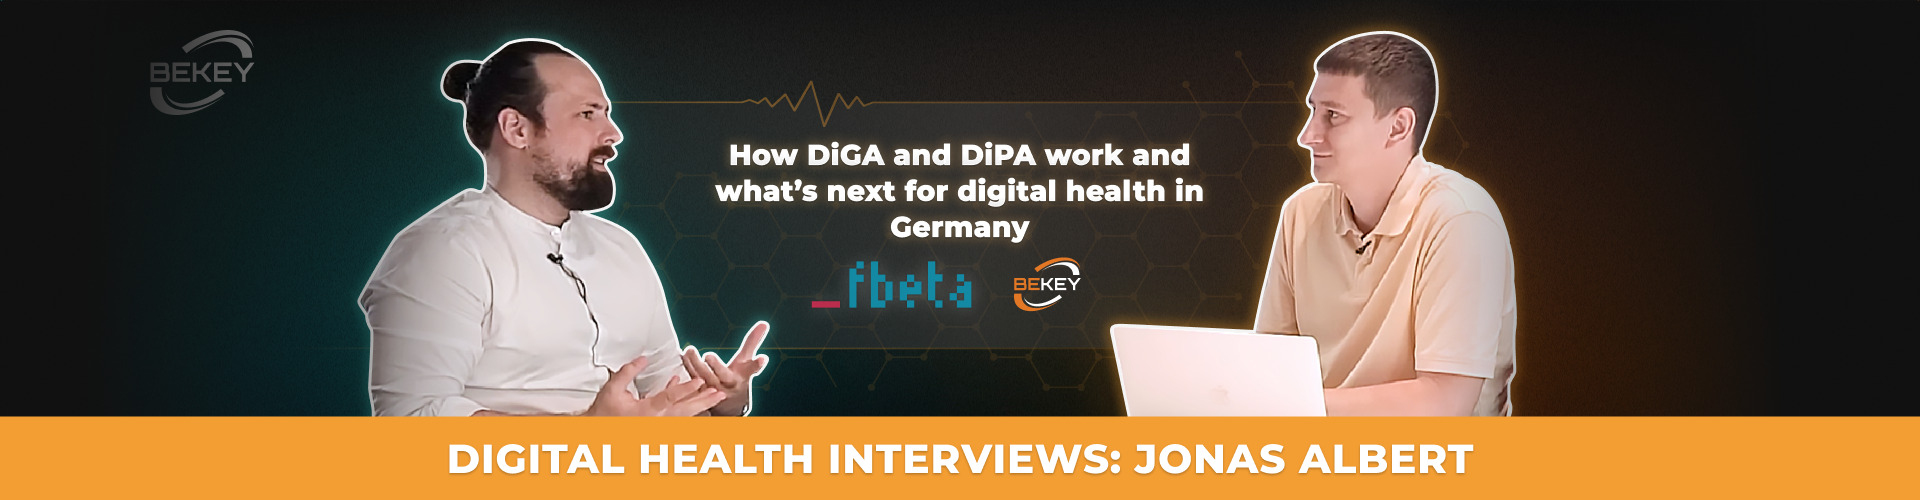 Digital Health Interviews: Jonas Albert — How DiGA & DiPA Work and Digital Health in Germany  - image